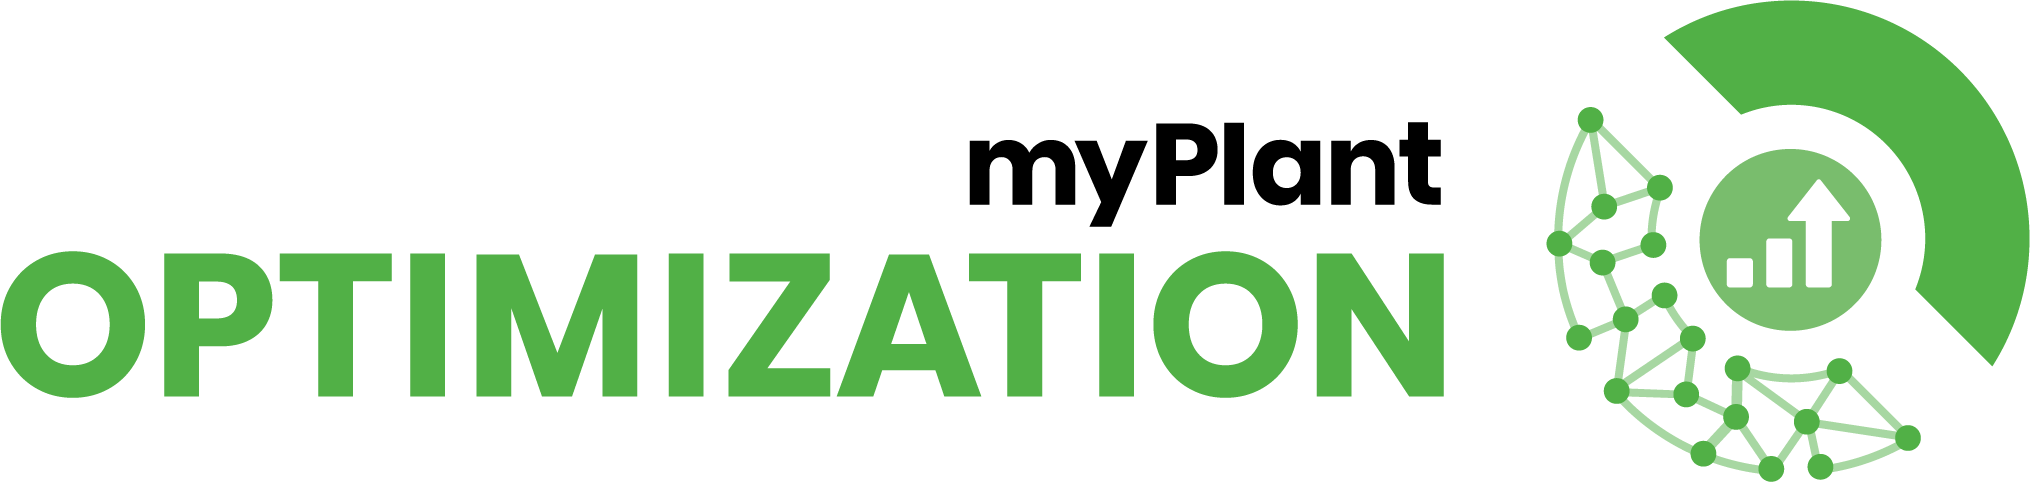 myPlant Optimization Logo